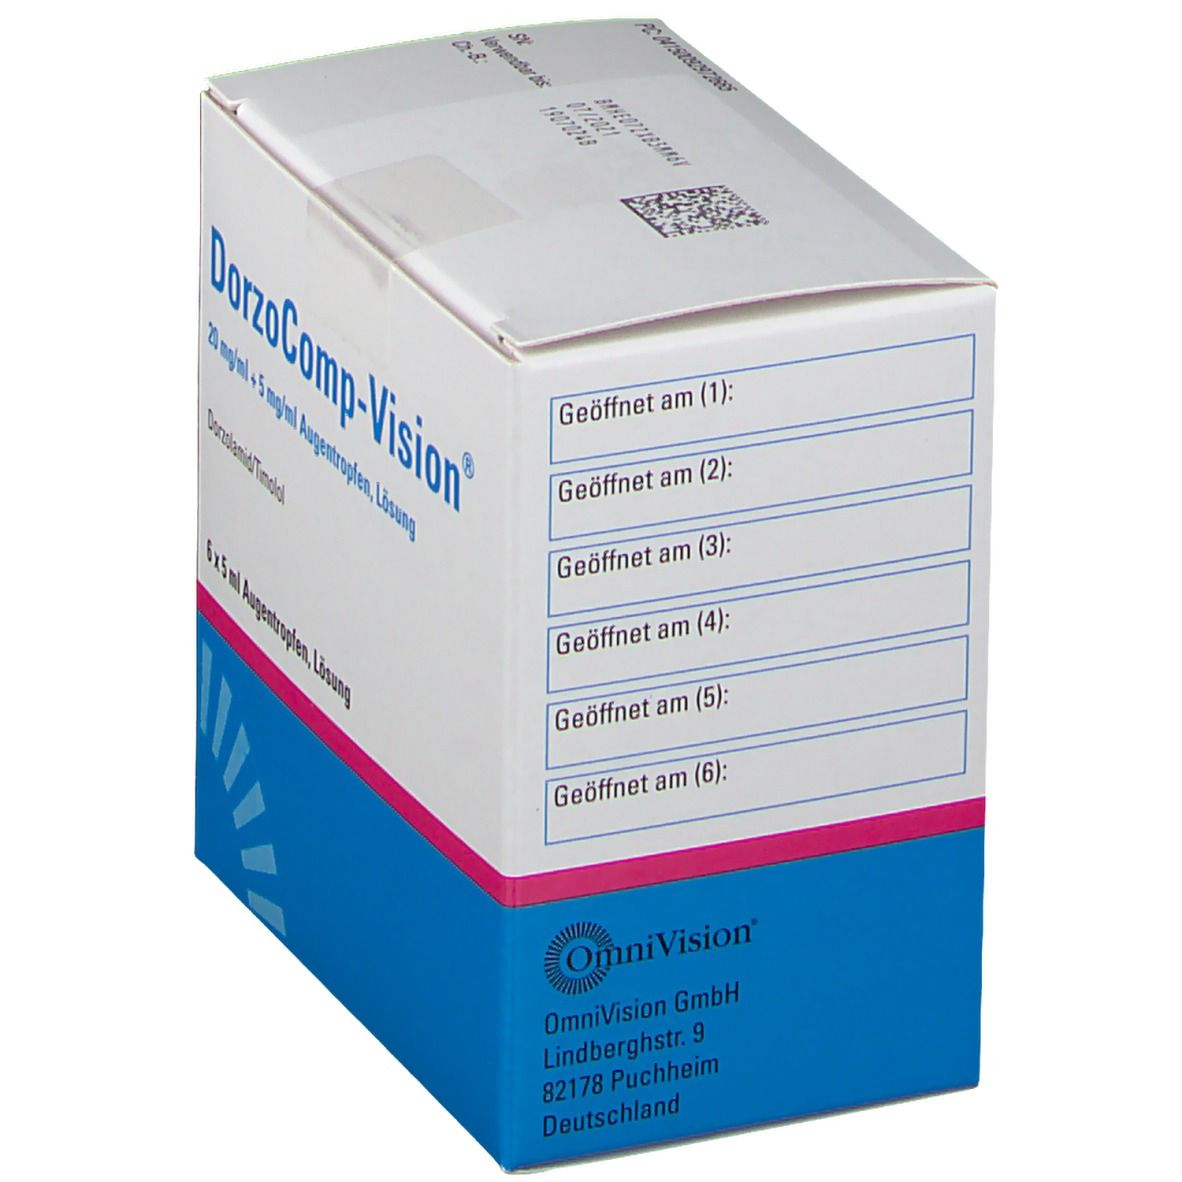 DorzoComp-Vision® 20 mg/ml + 5 mg/ml